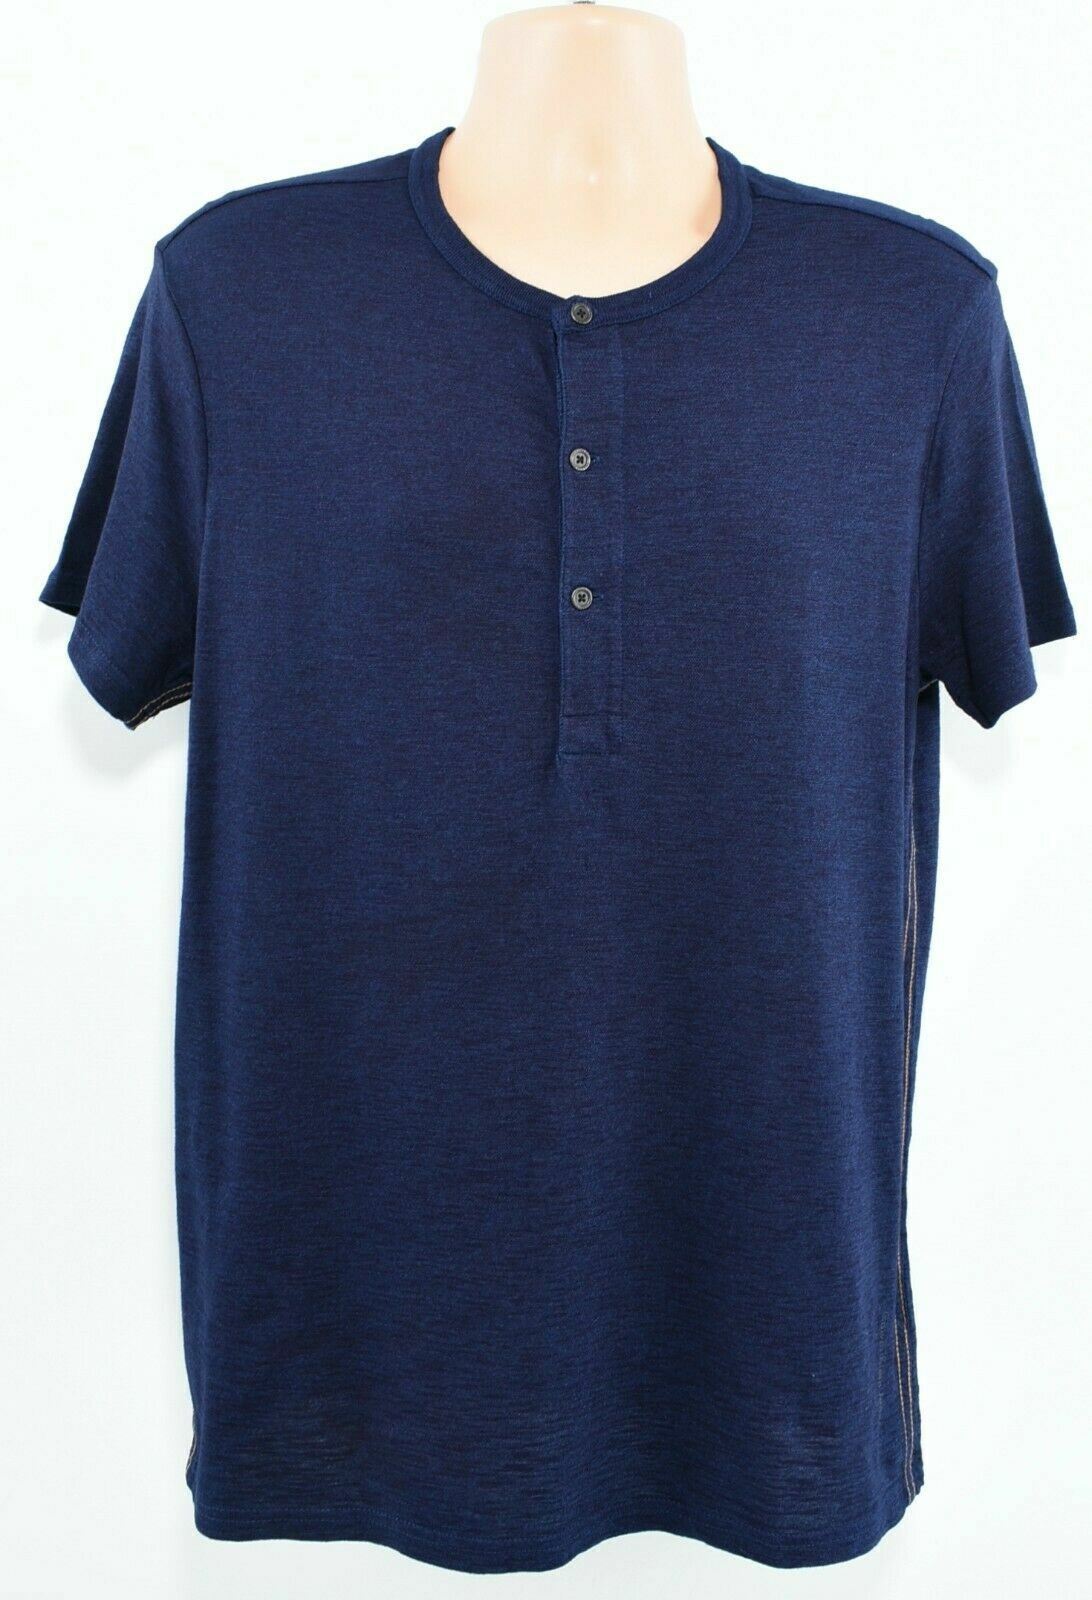 CALVIN KLEIN JEANS Men's Button Neck T-shirt, True Indigo Blue, size L